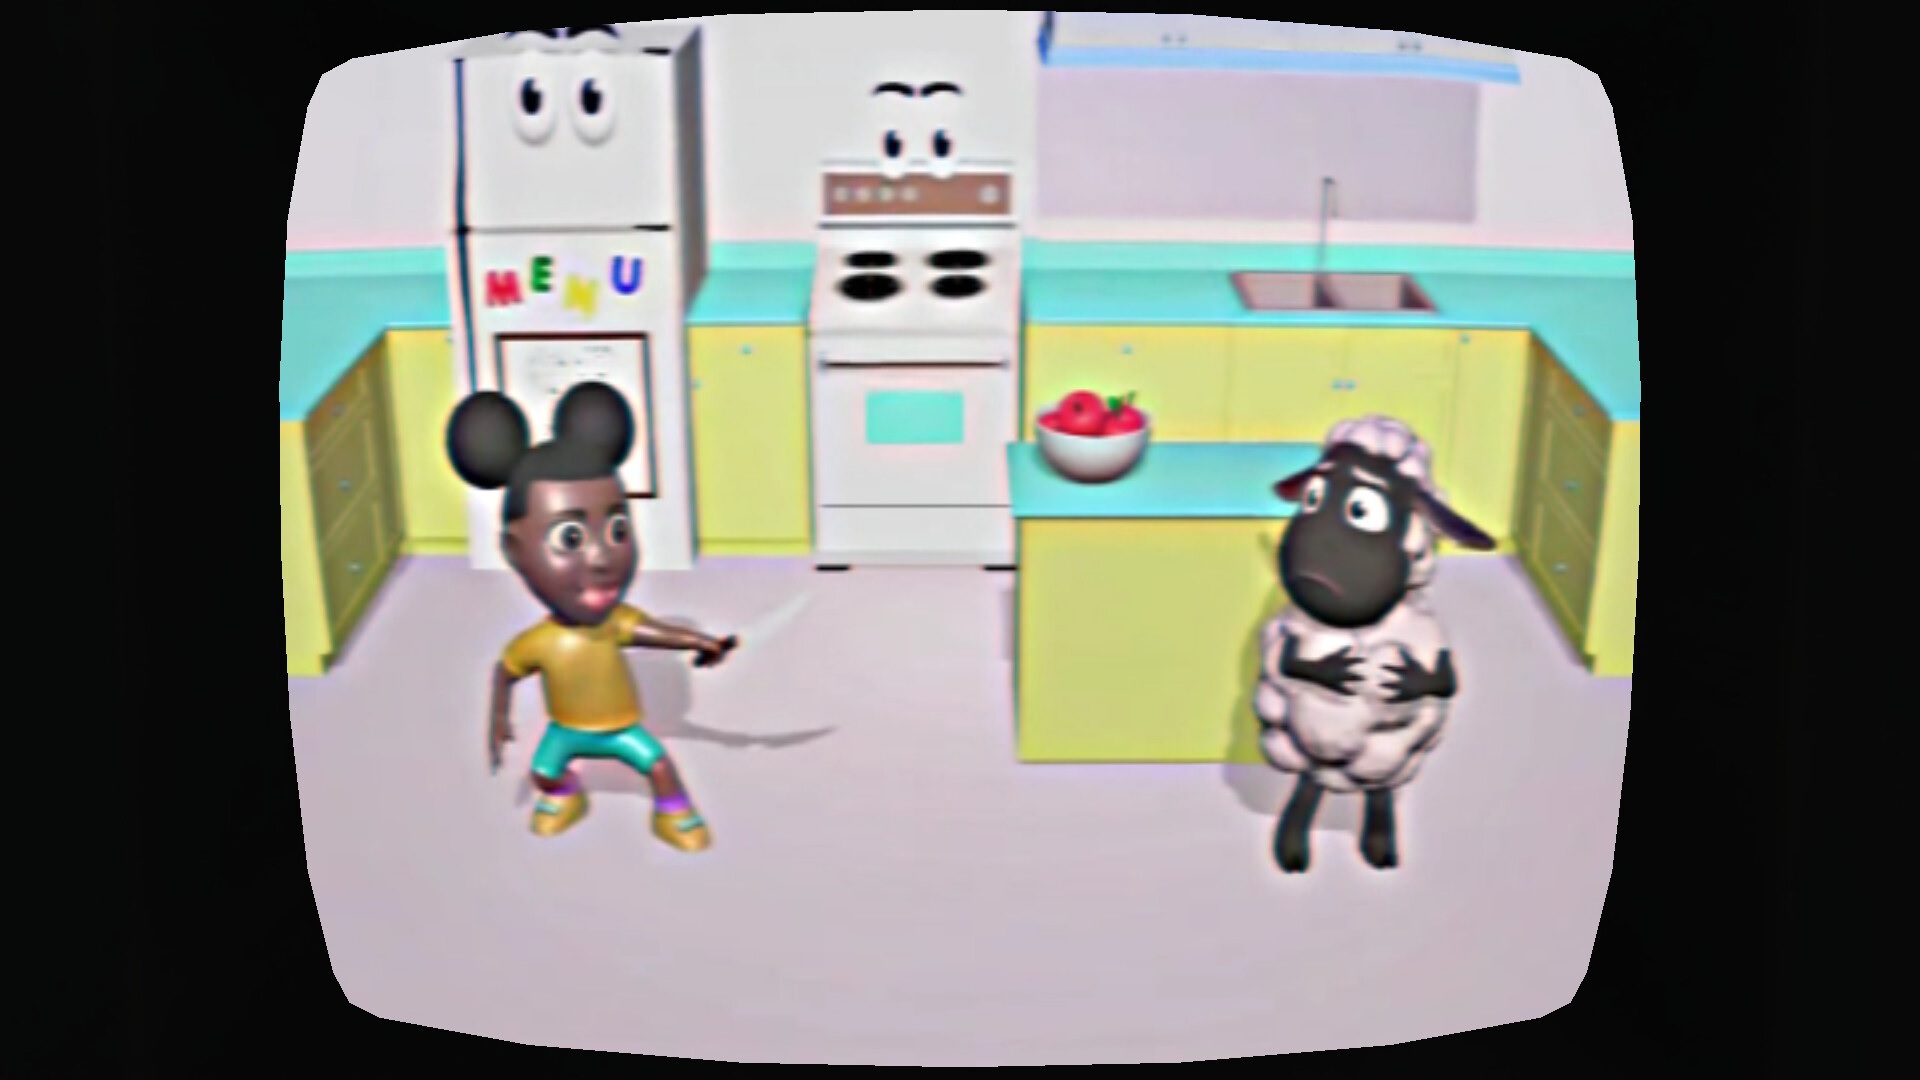 Children's Cartoon-Themed Horror Game 'Amanda the Adventurer